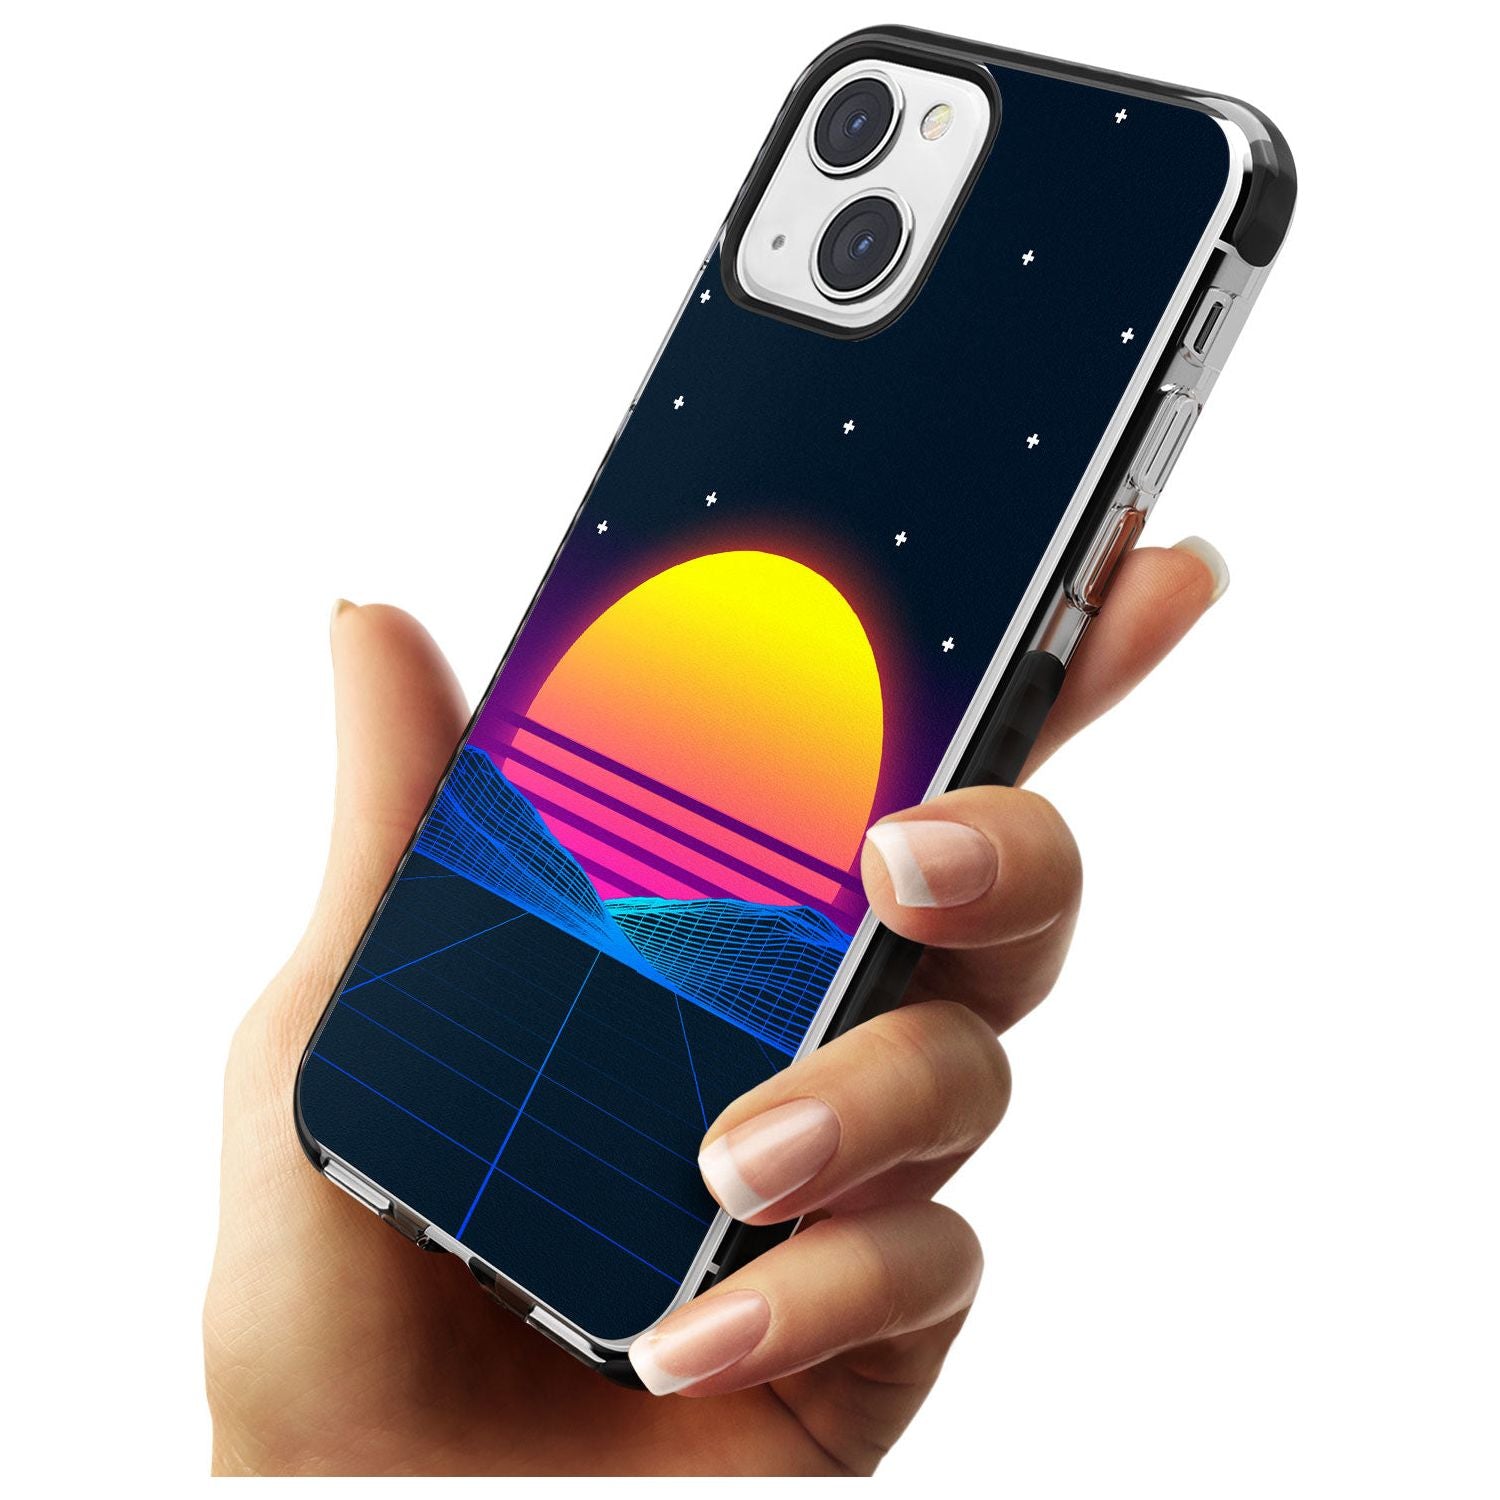 Retro Sunset Vaporwave Black Impact Phone Case for iPhone 13 & 13 Mini